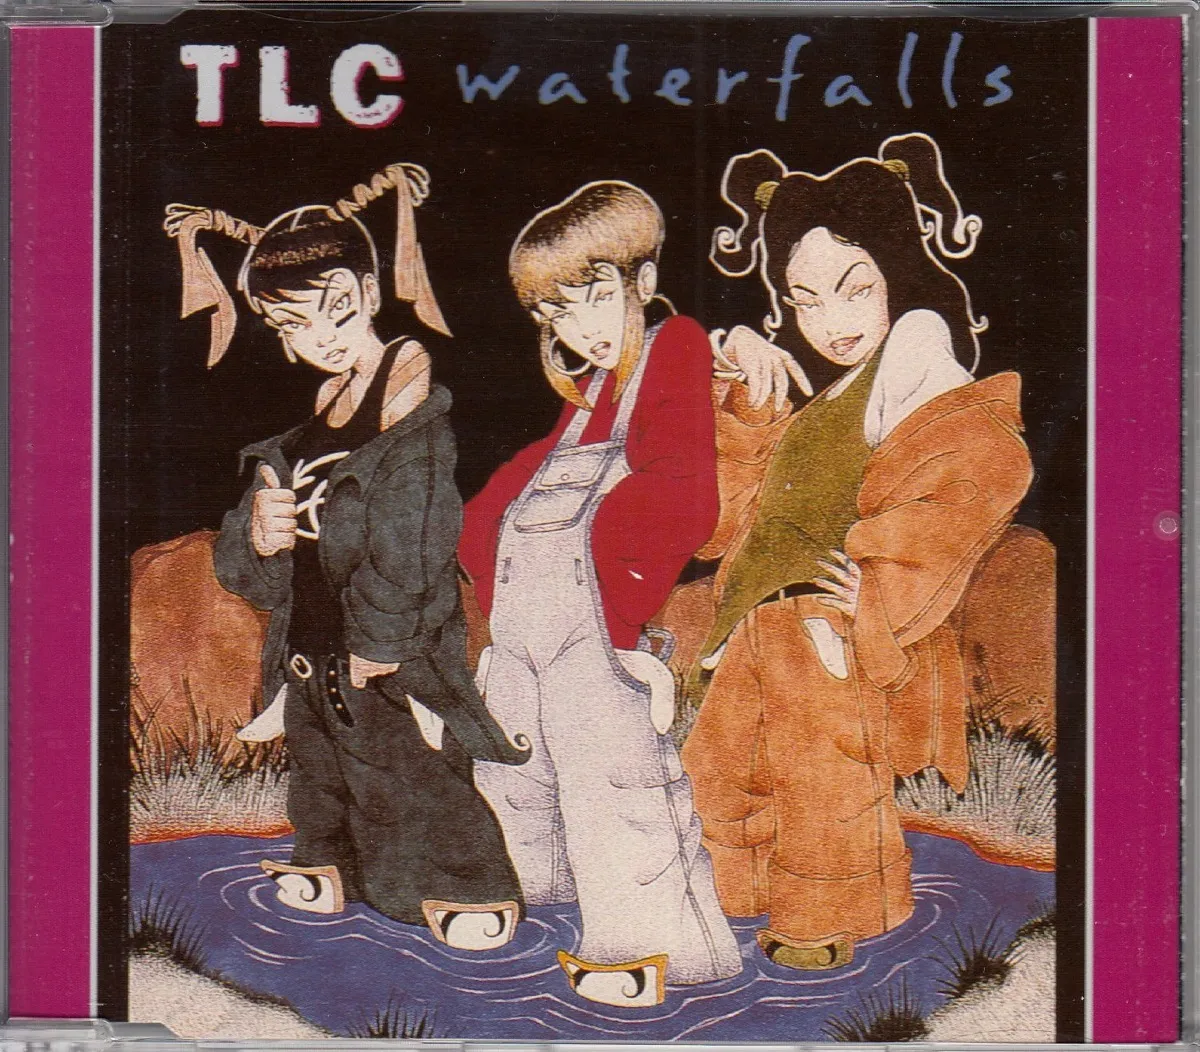 TLC "Waterfalls" single cover